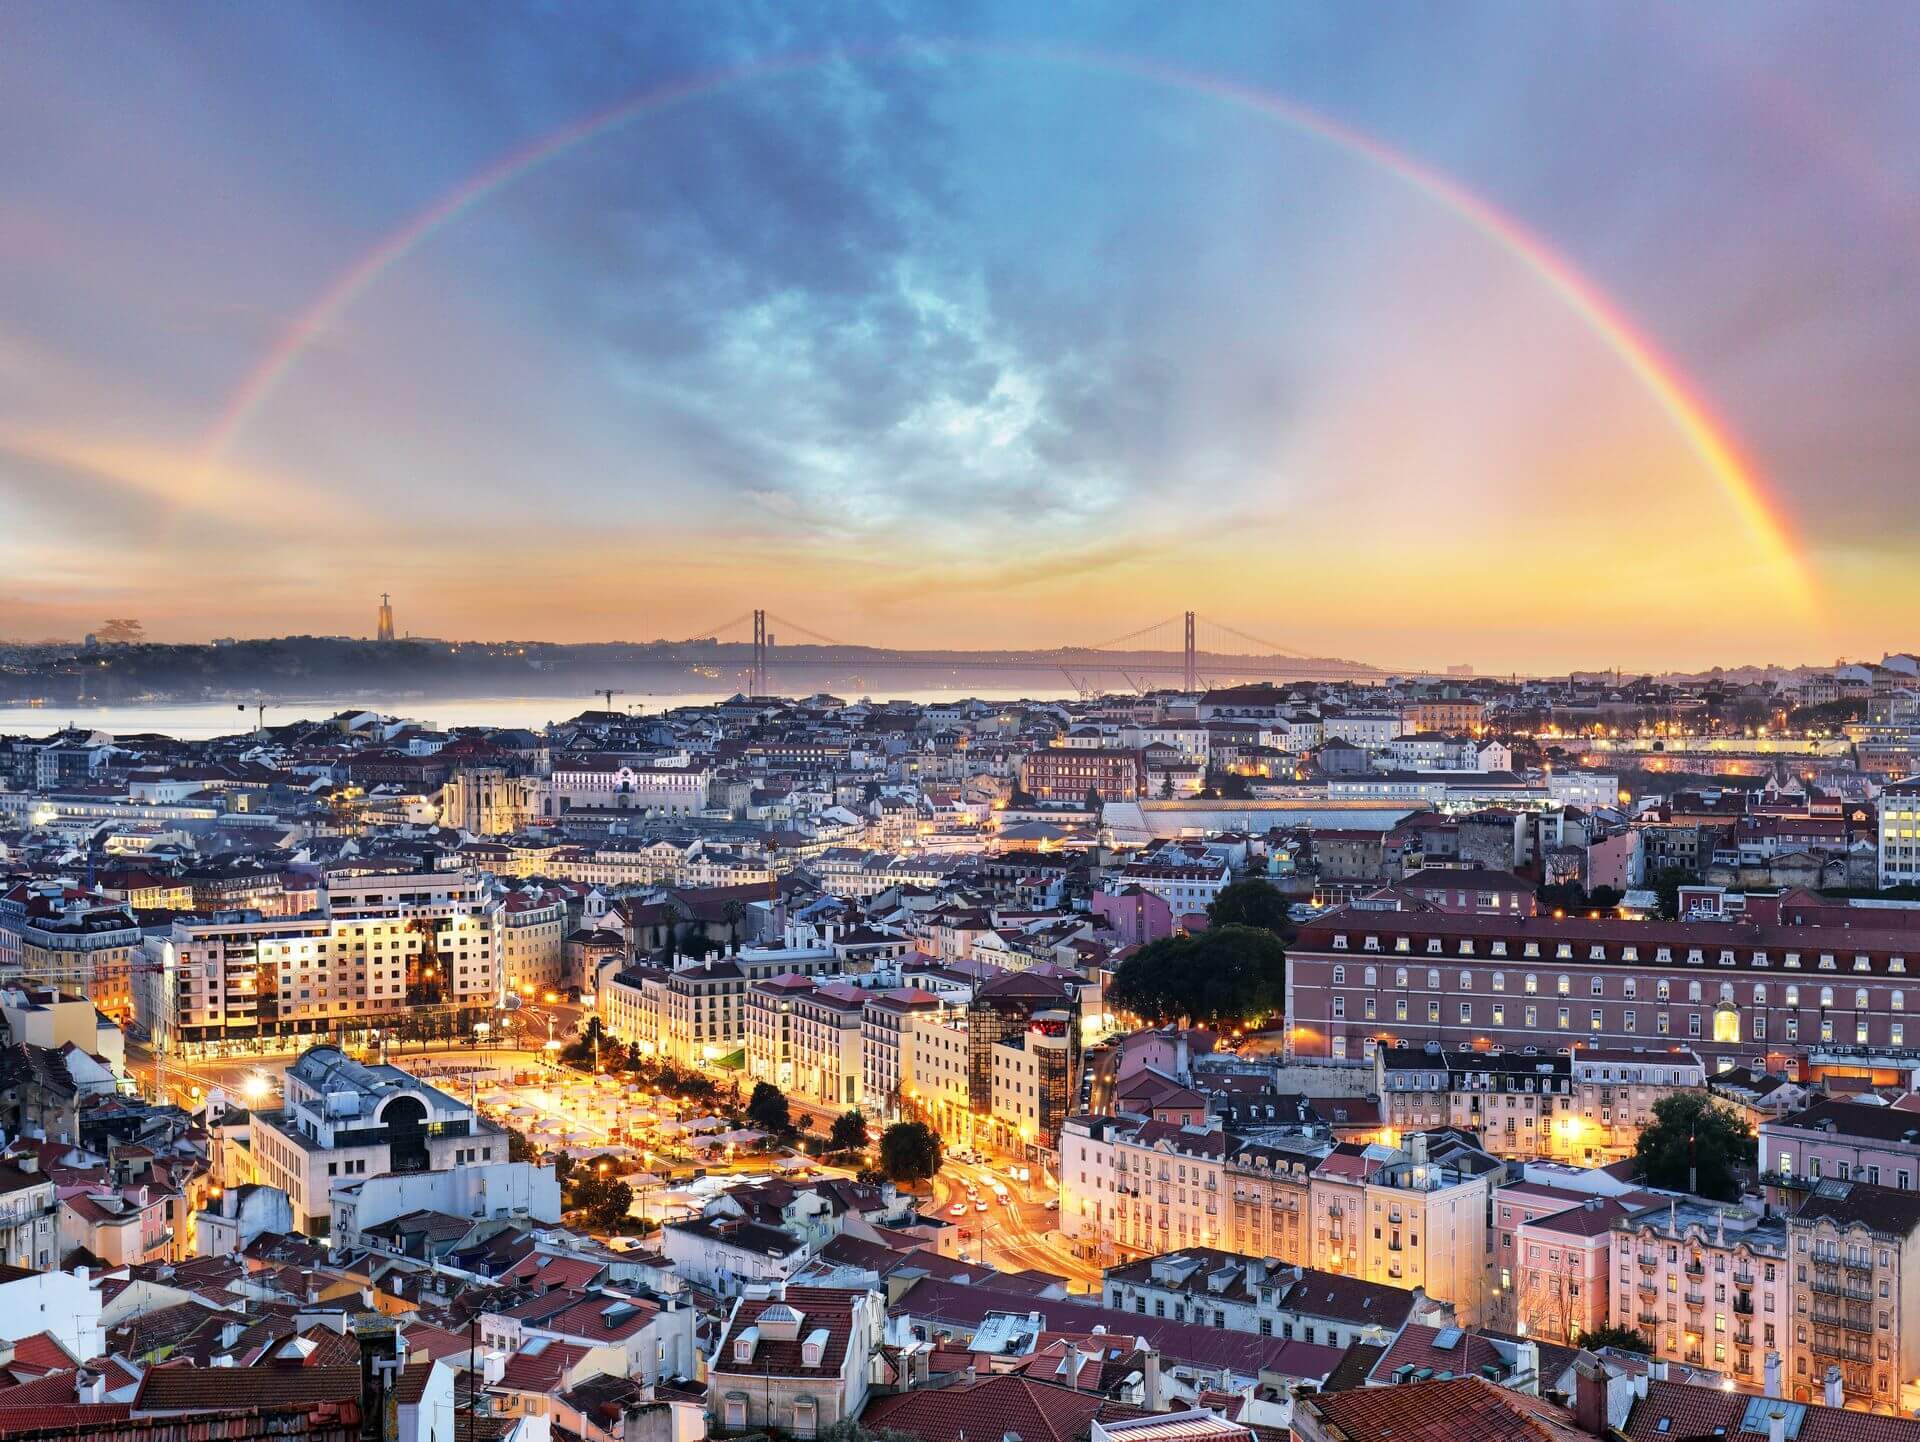 Lizbona atrakcje - widok na miasto